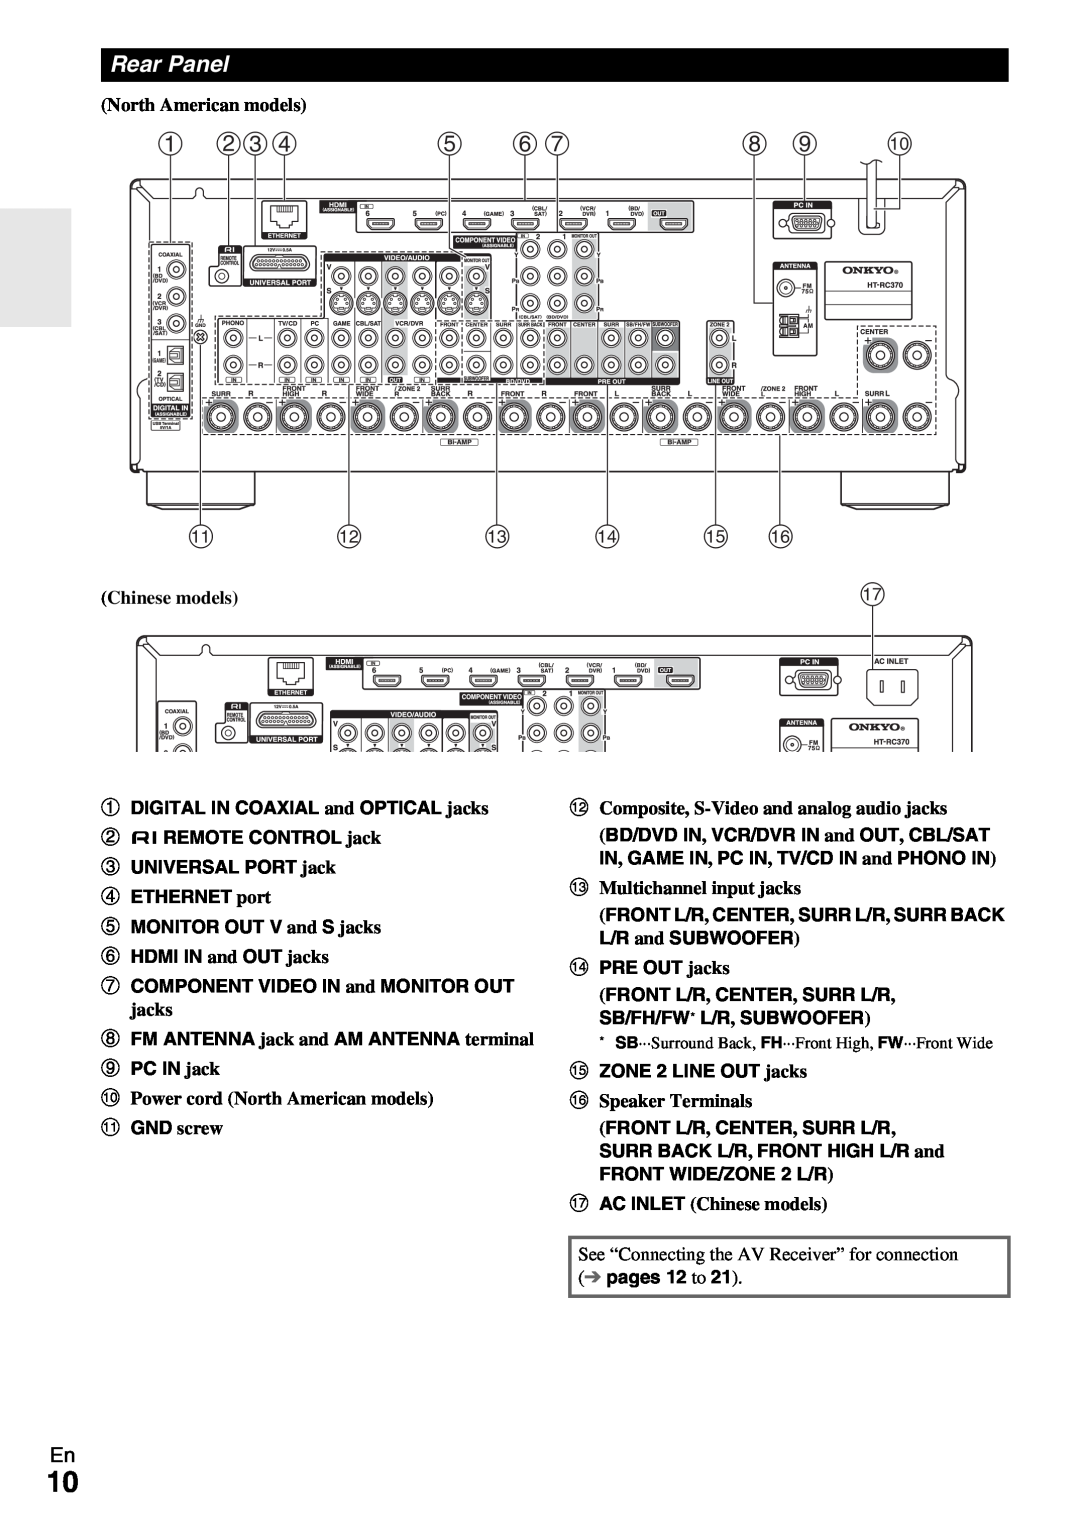 Onkyo HT-RC370 instruction manual 